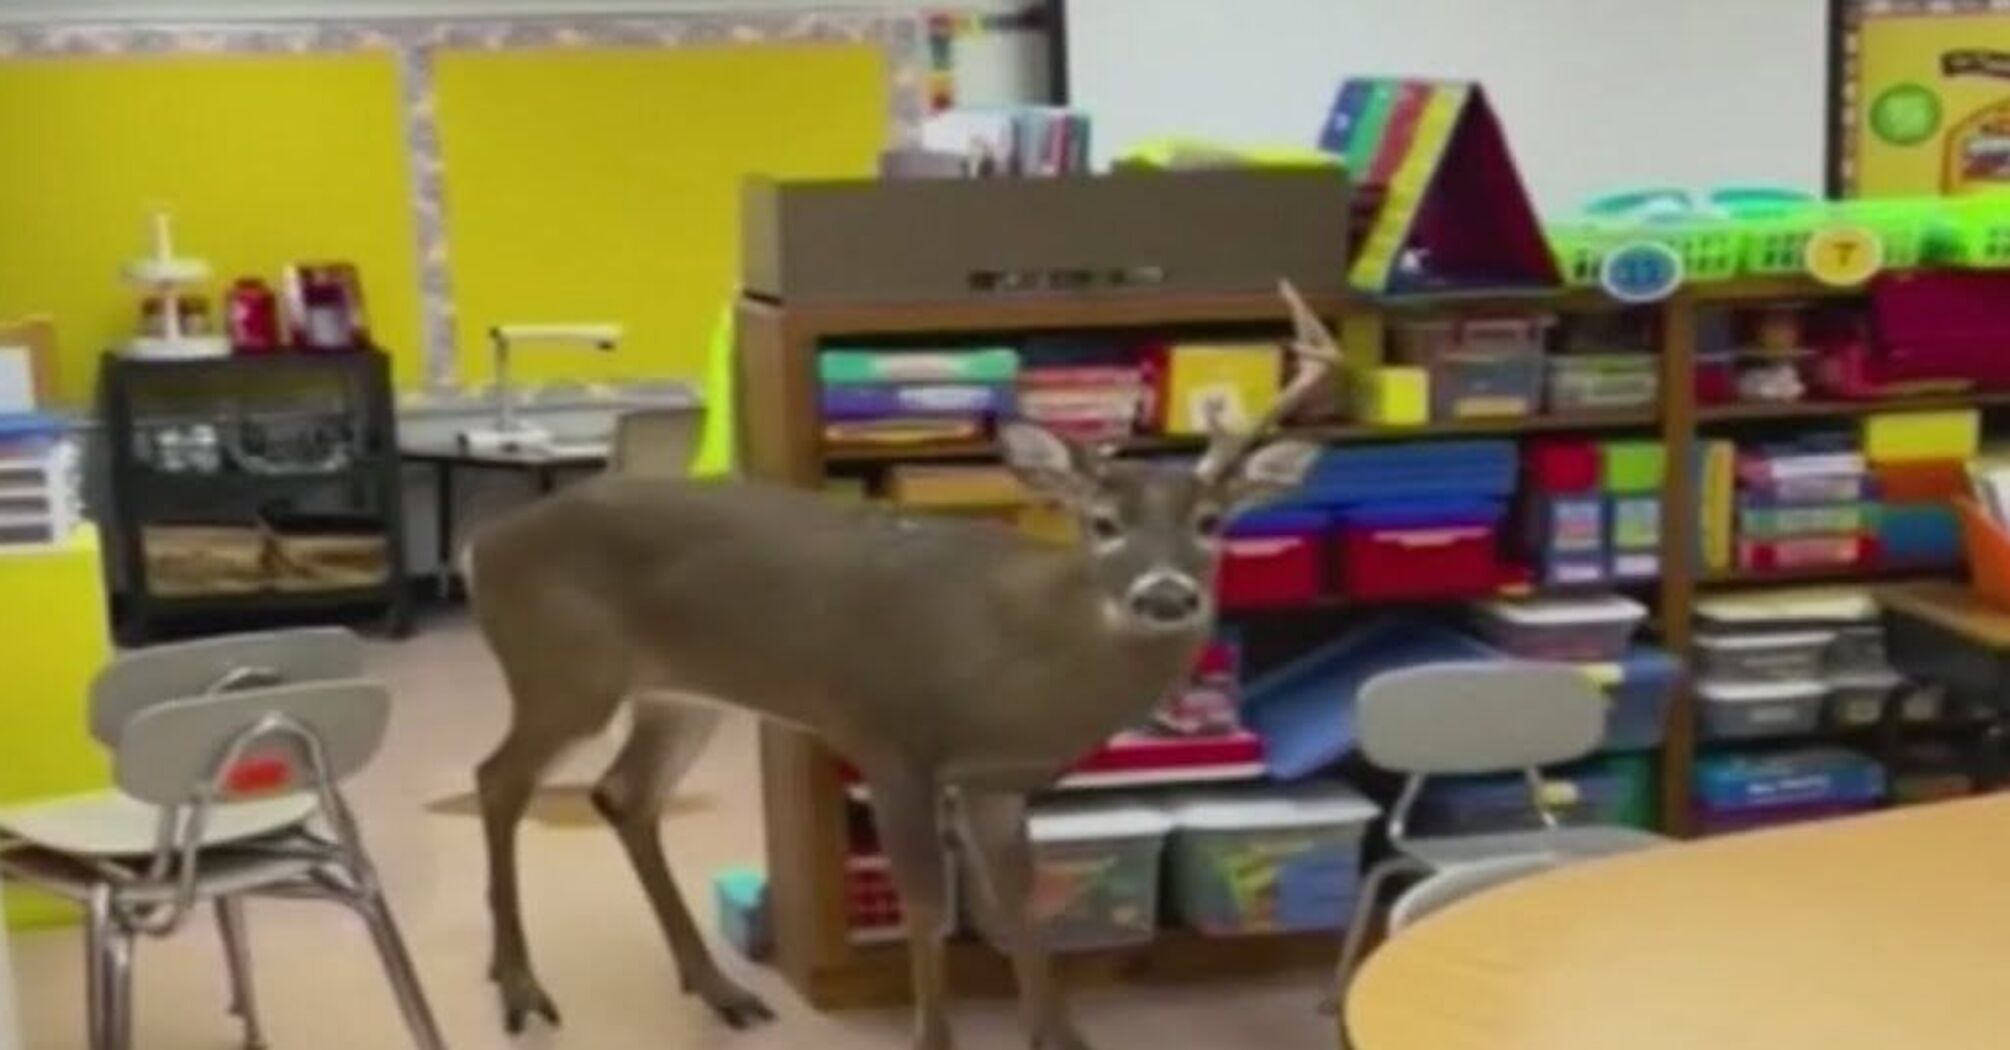 A deer caused a stir in a school